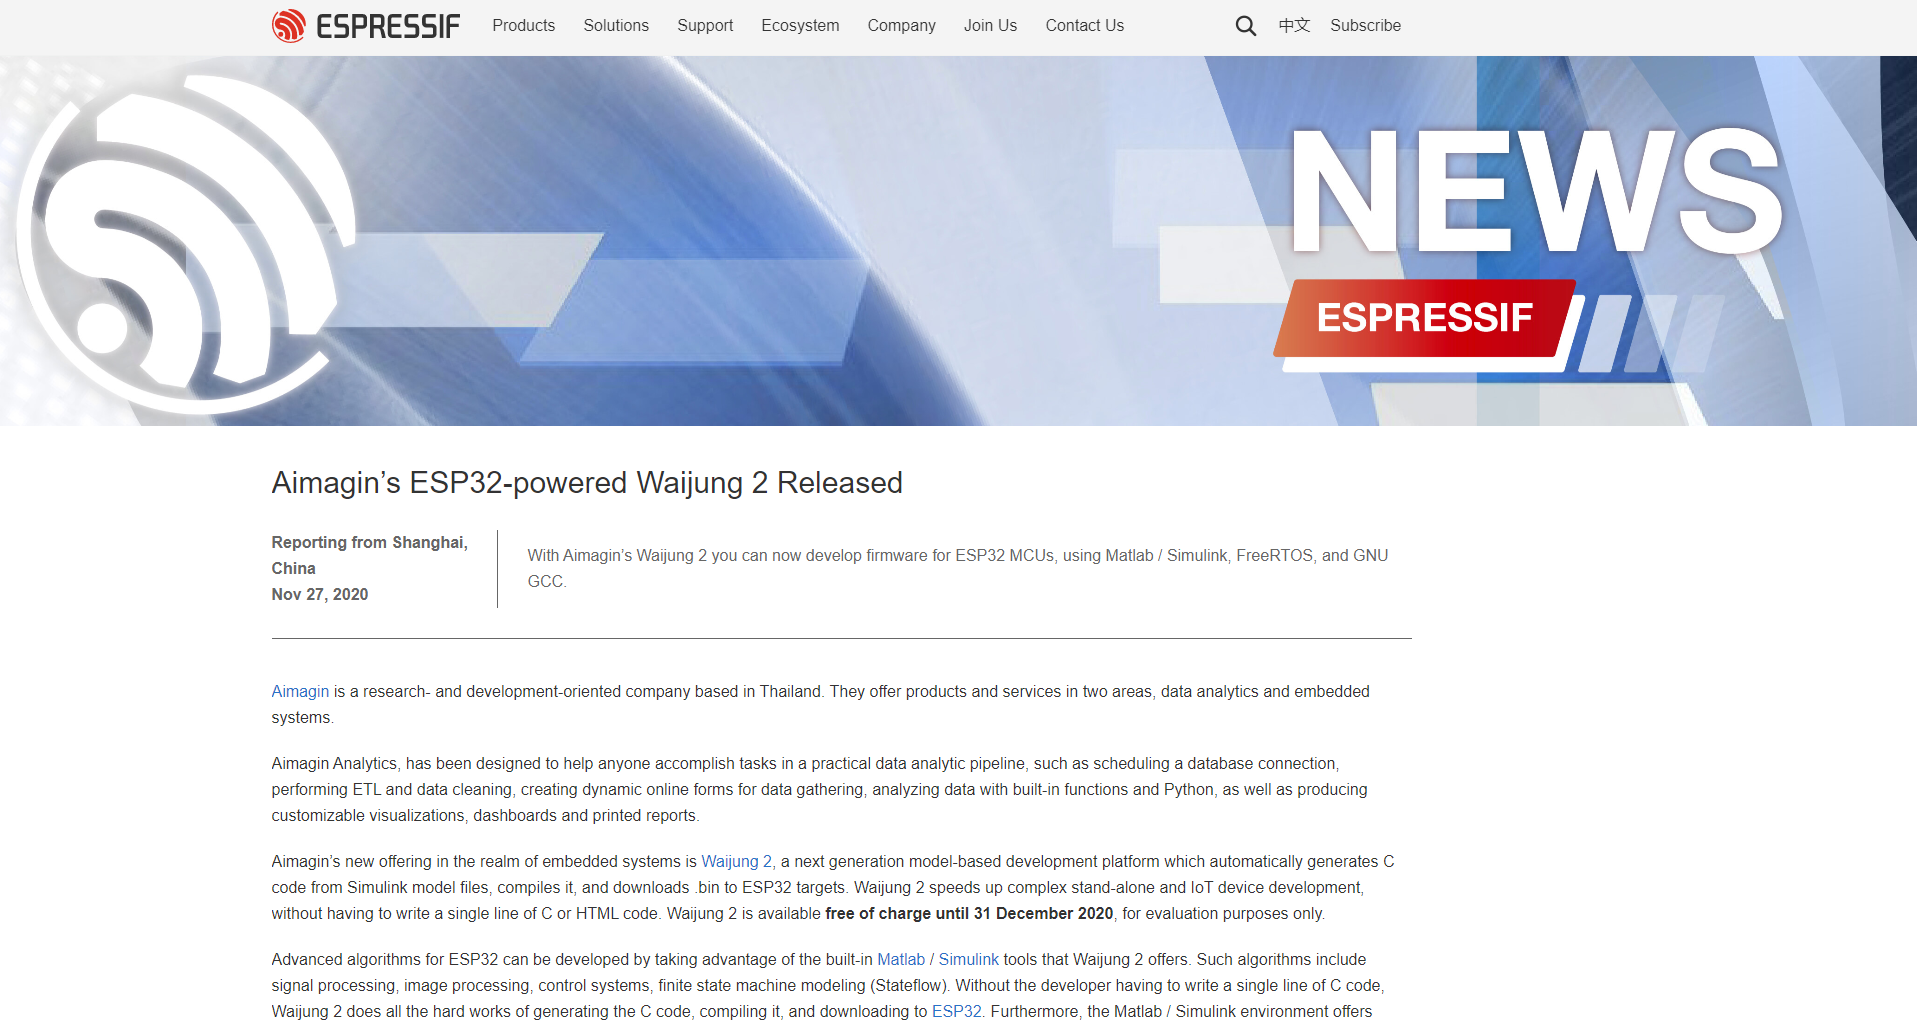 Espressif Aimagin’s ESP32-powered Waijung 2 News Released